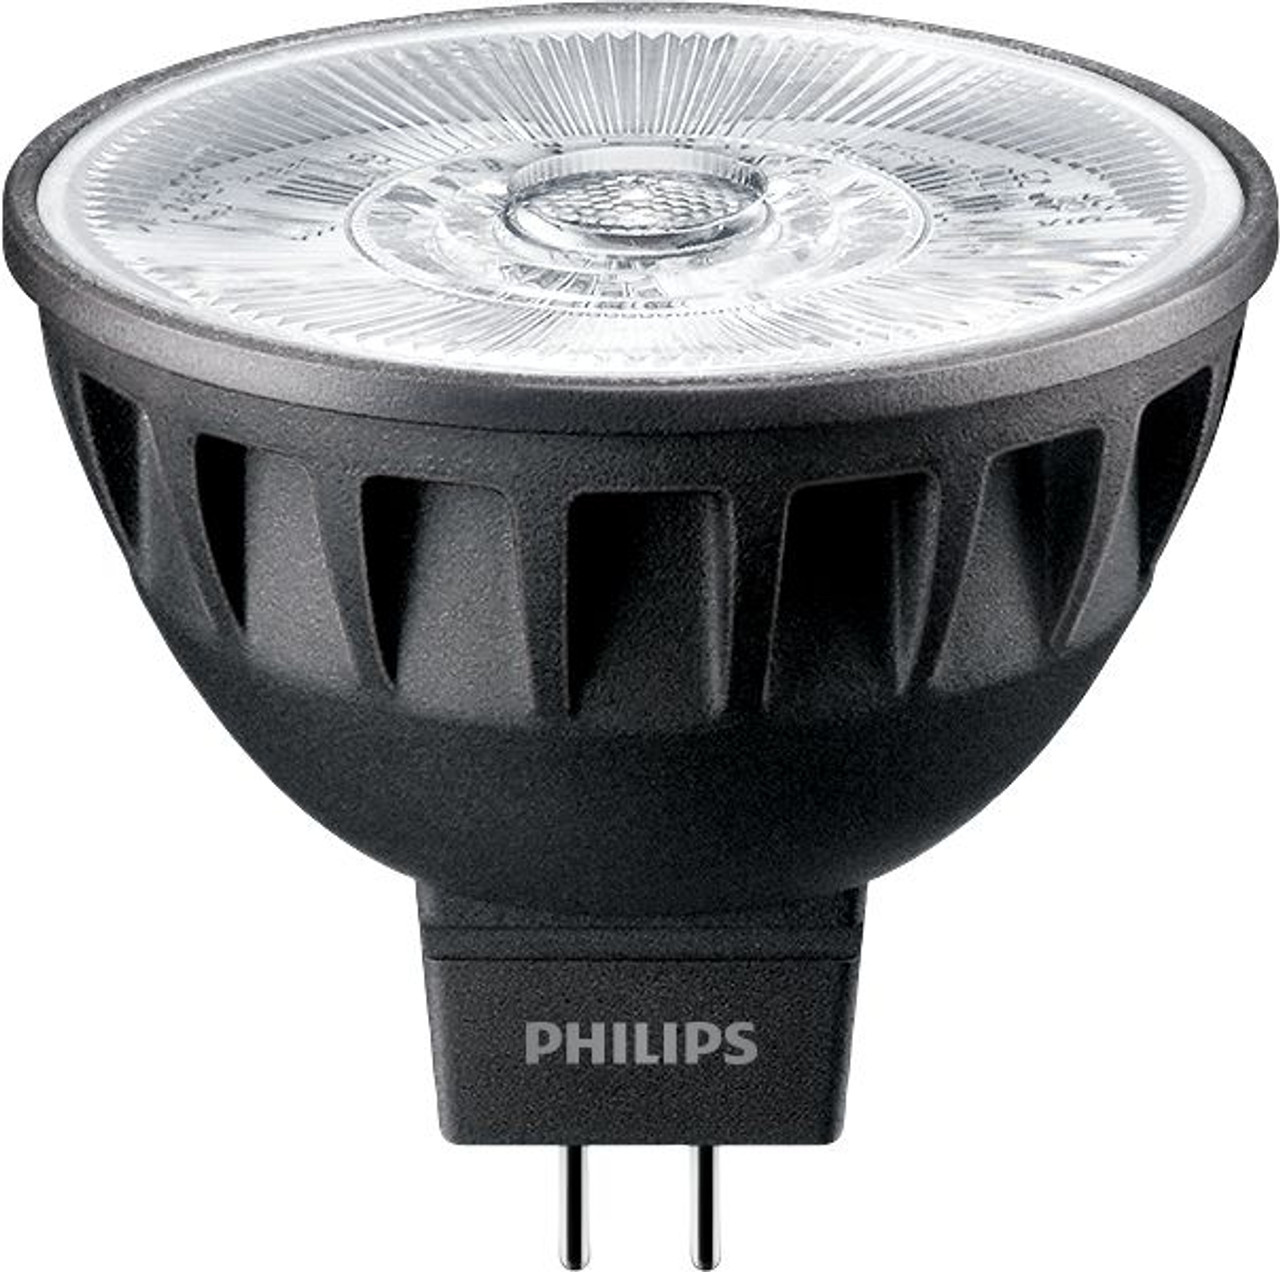 Hijsen Sportman China Philips Lighting MASTER LED ExpertColorÊ6.7-35W MR16 930 10D LED Spots